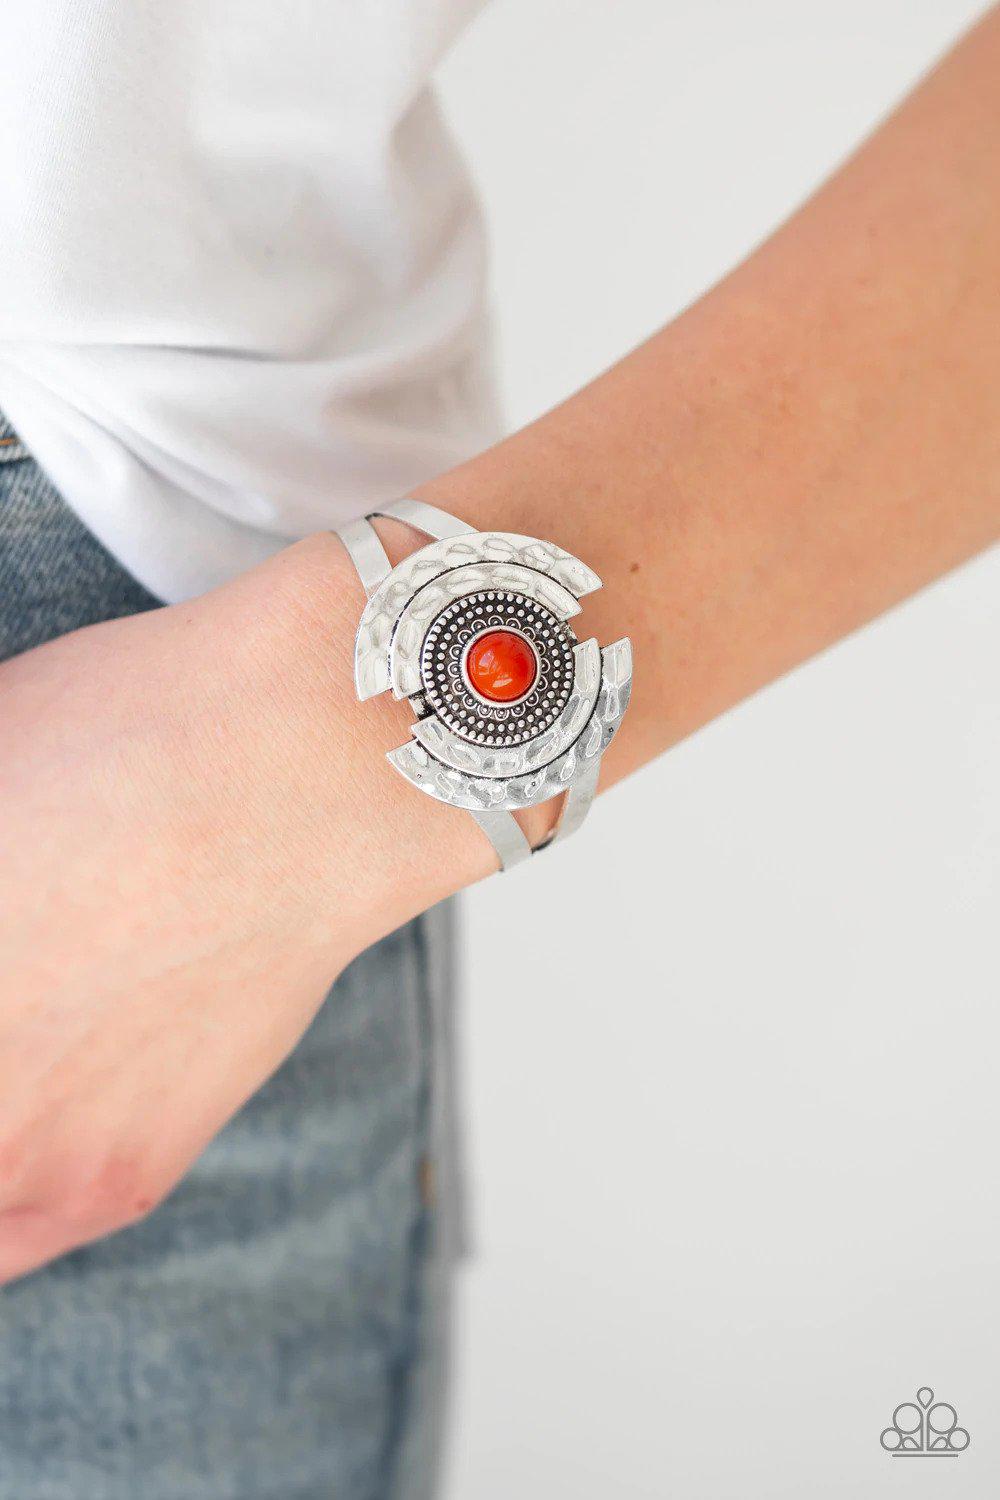 Incredibly Indie Orange Bracelet - Paparazzi Accessories- lightbox - CarasShop.com - $5 Jewelry by Cara Jewels